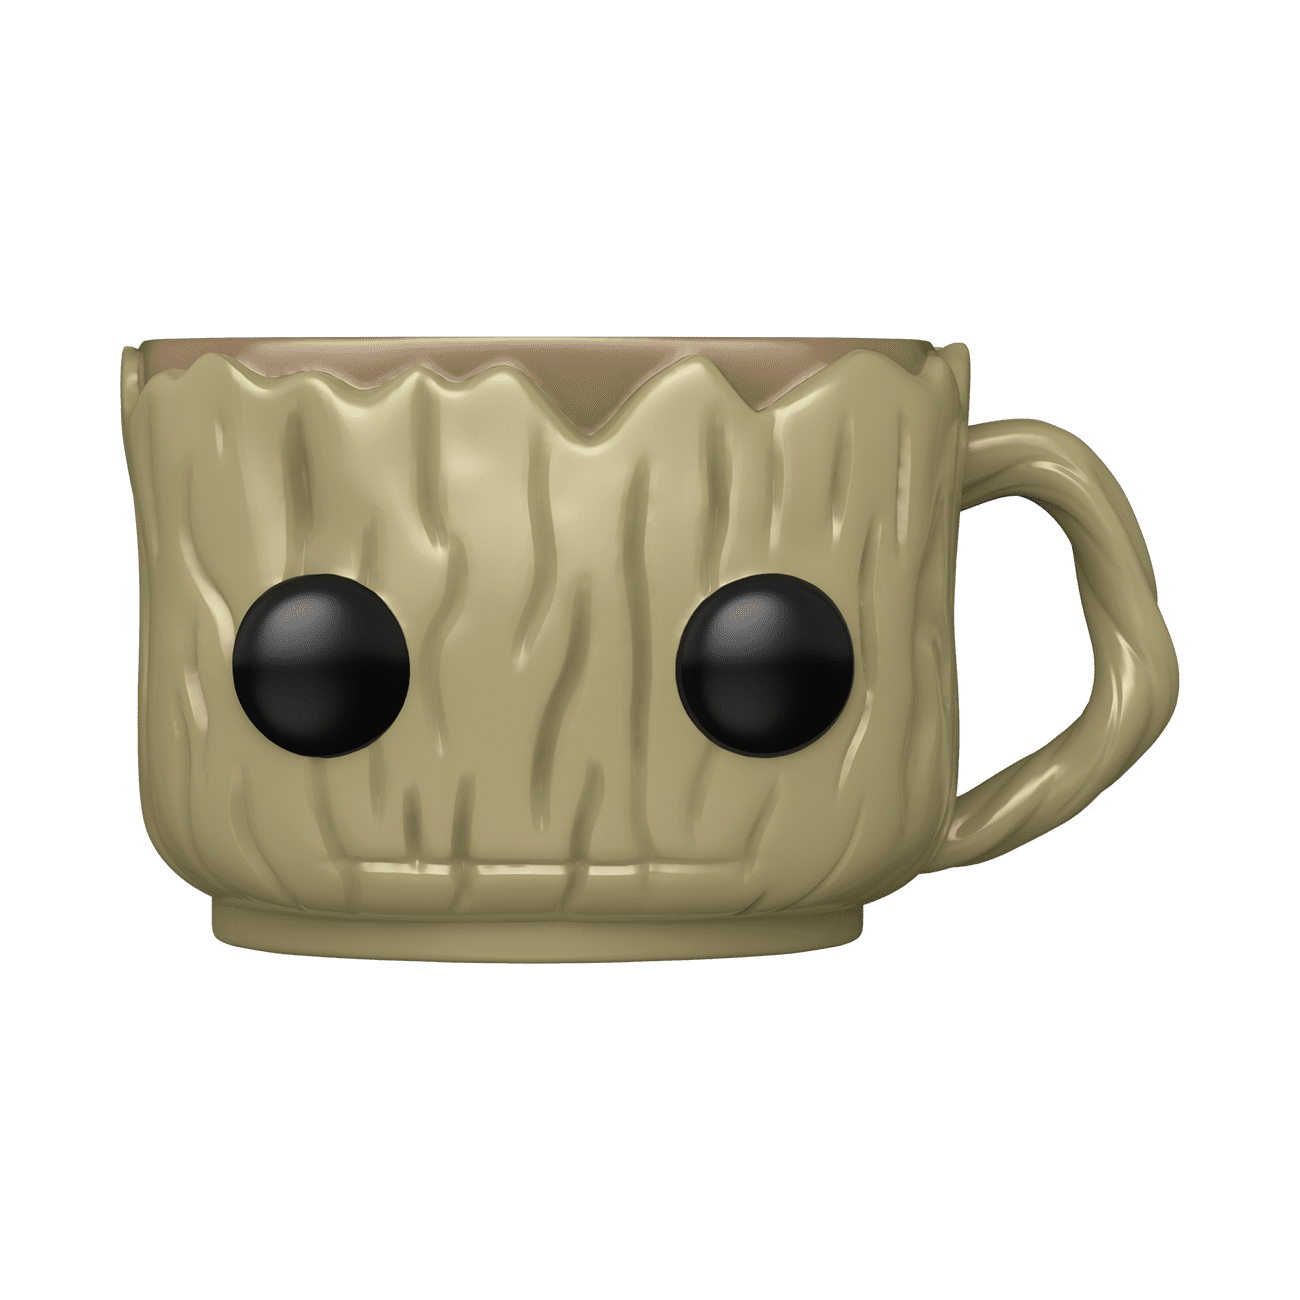 Spiderman Ceramic Mug 16oz Funko Pop! Mug Marvel Collectable New